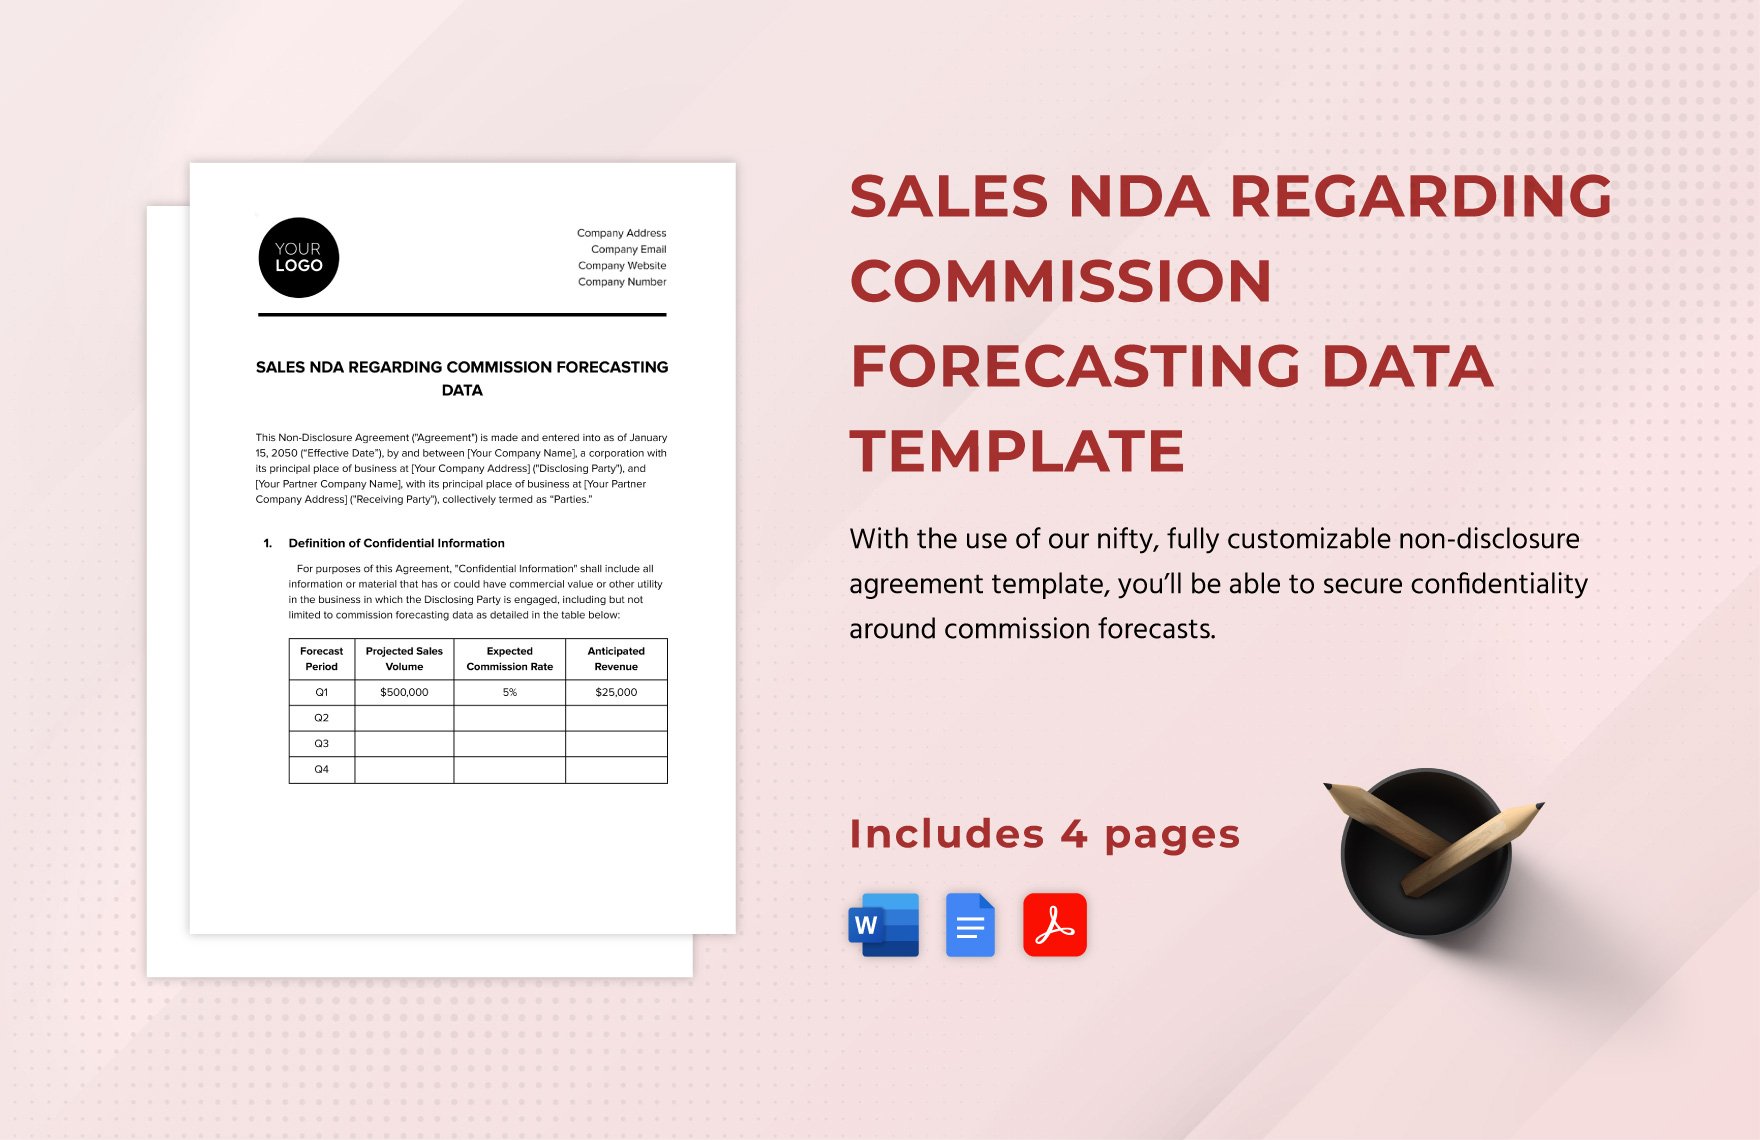 Sales NDA Regarding Commission Forecasting Data Template